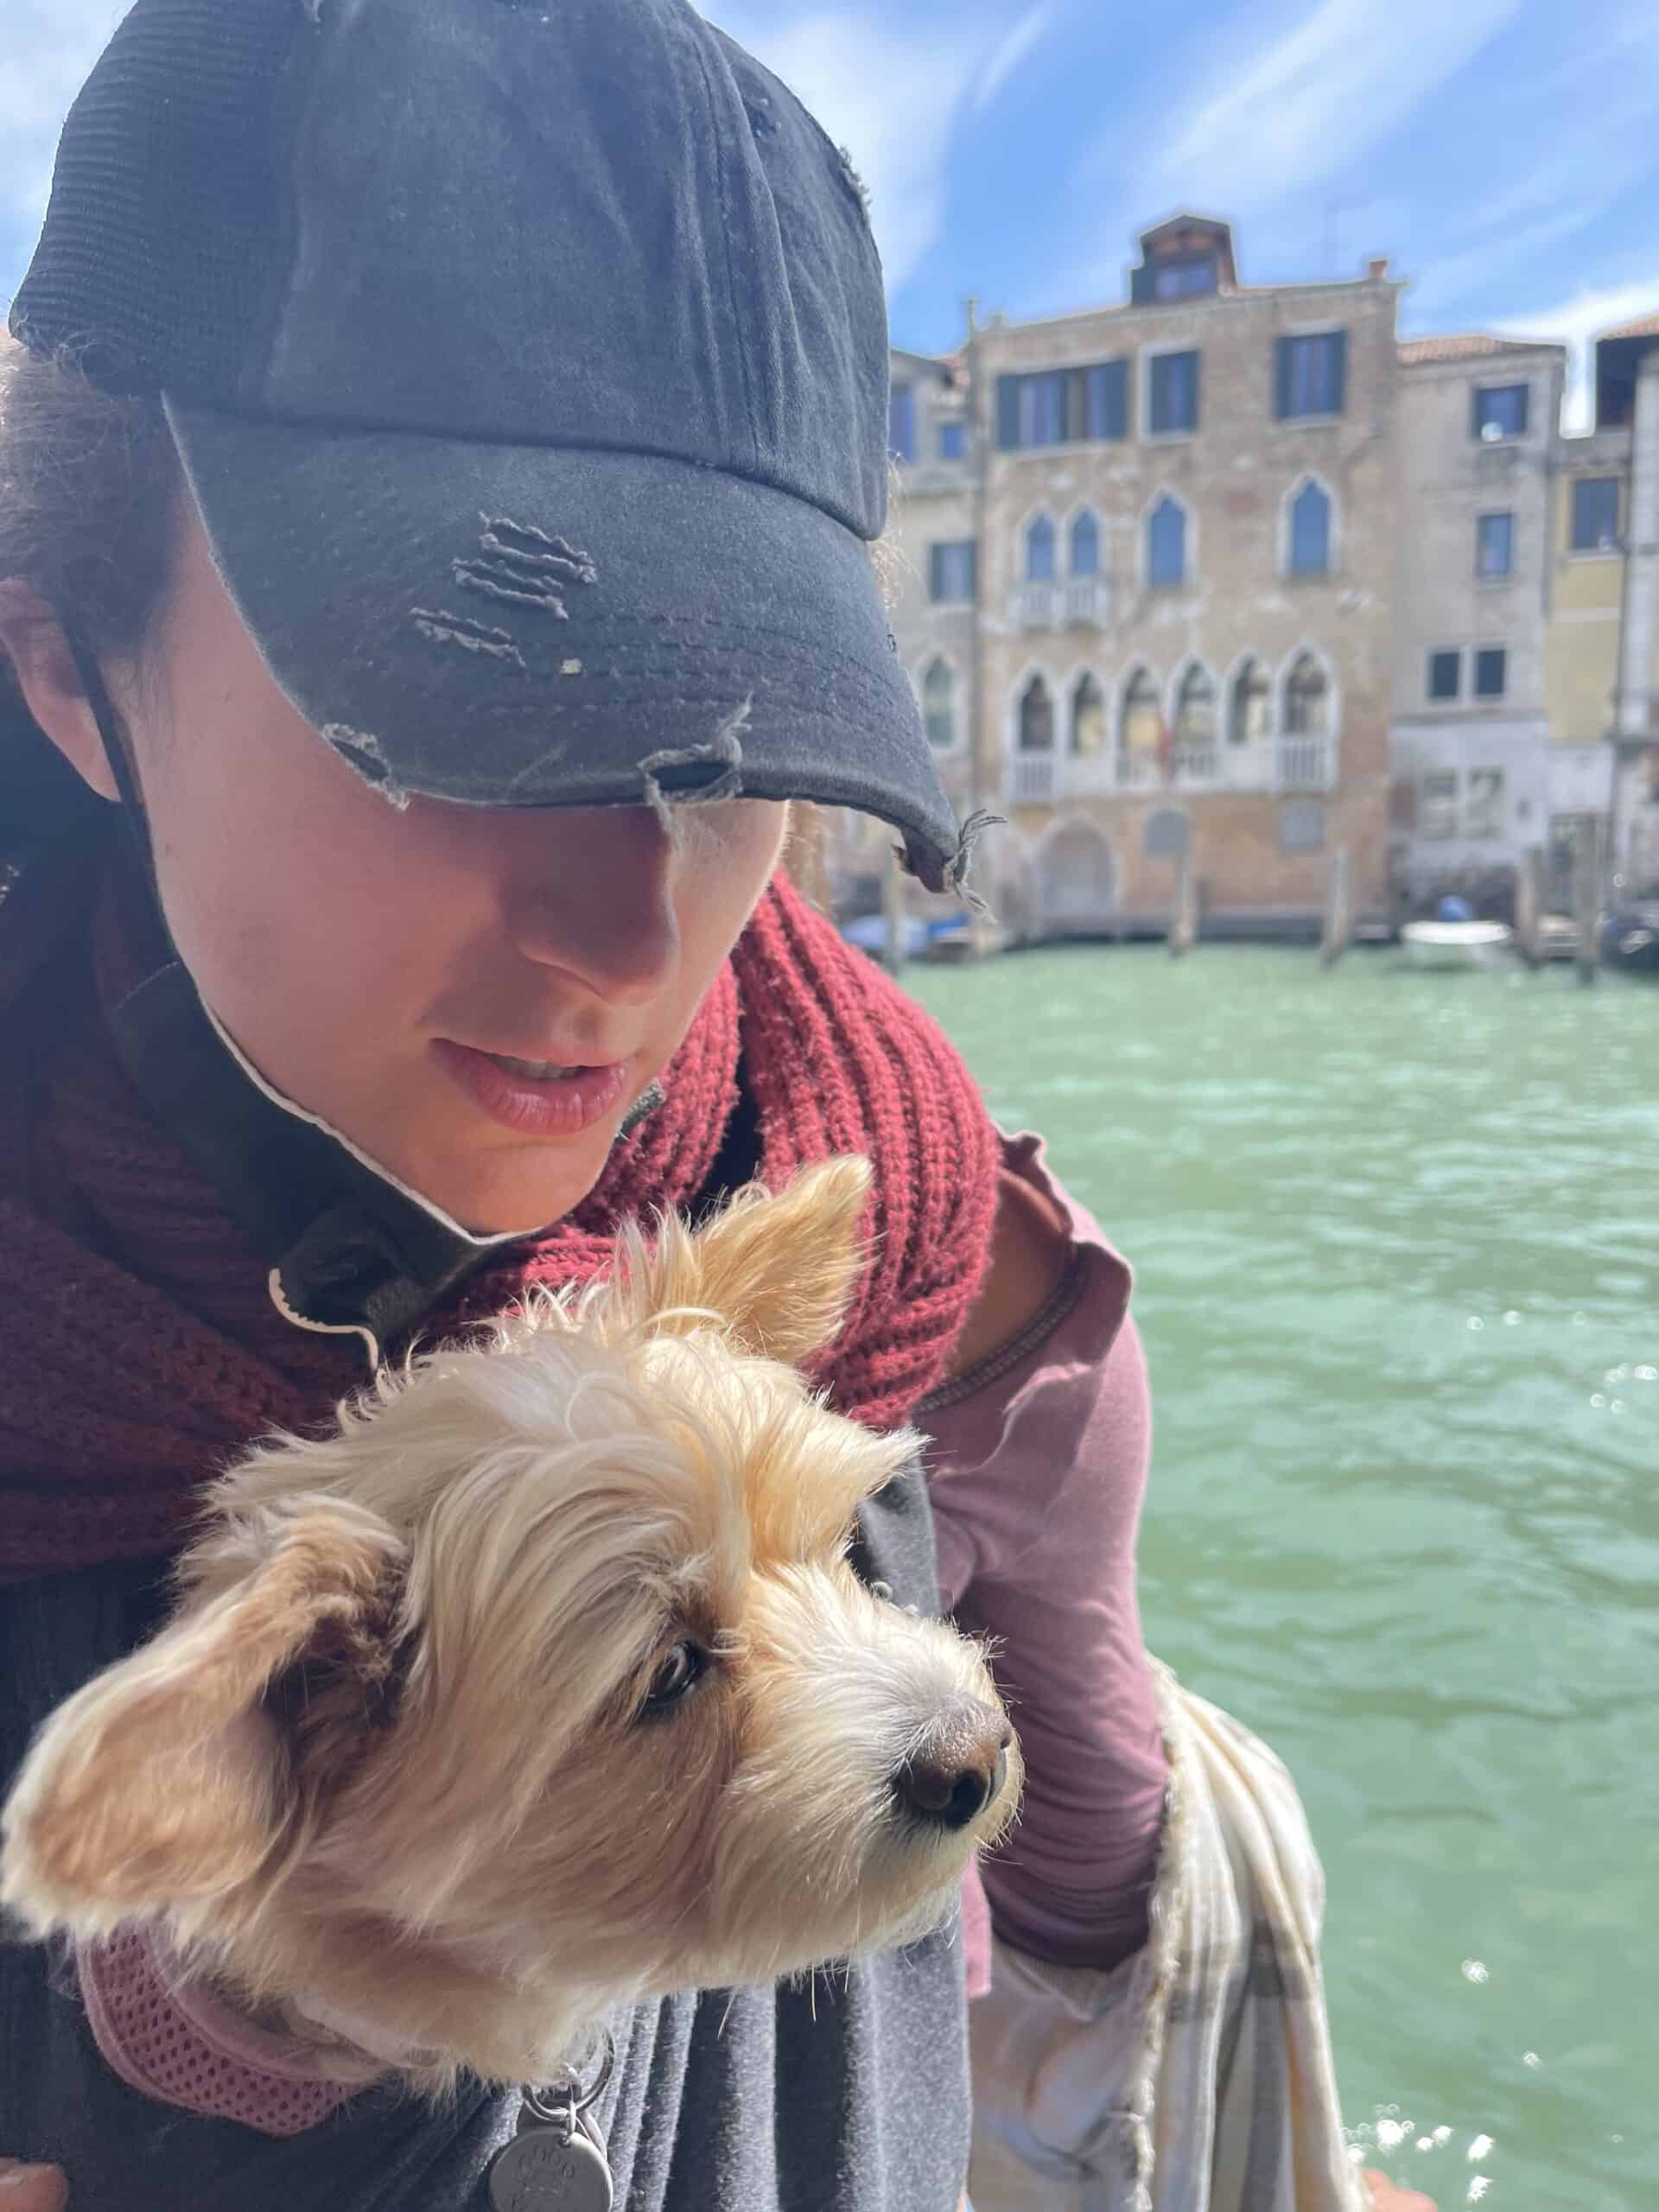 Sheila and I riding the Vaporetta in Venice, Italy